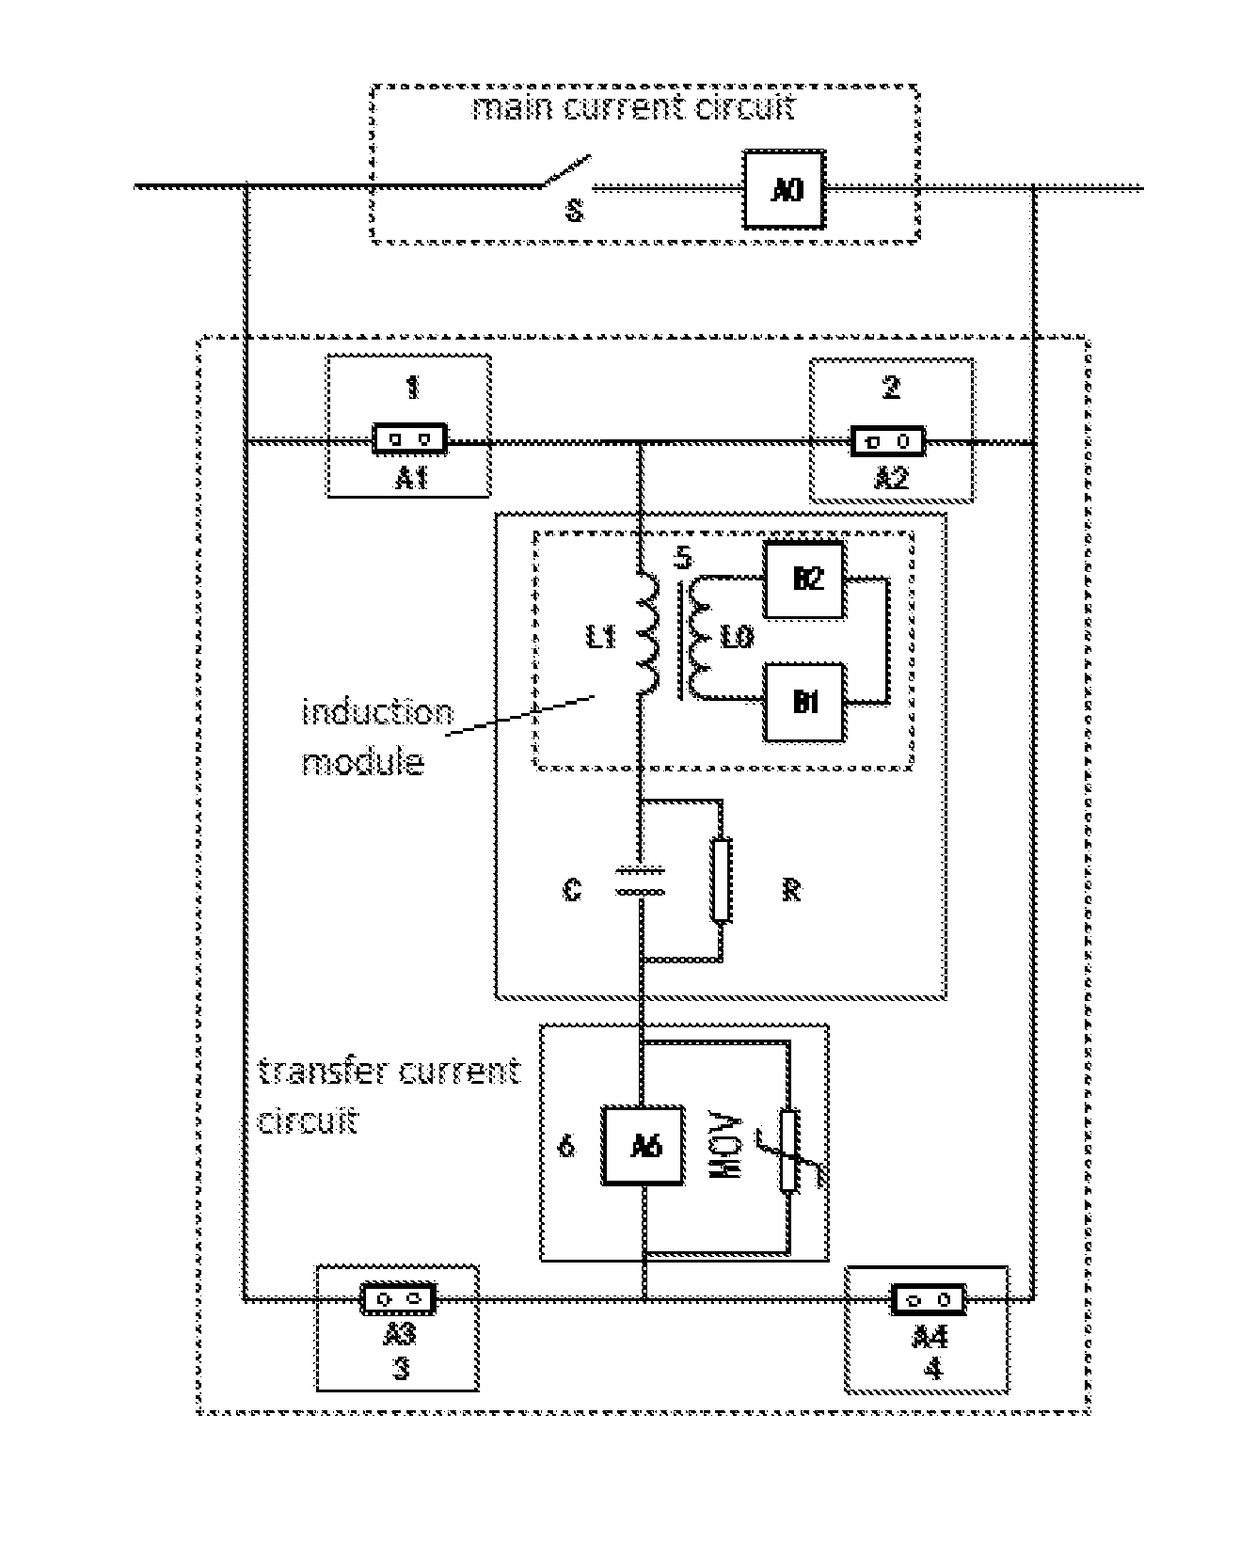 Arc-free DC circuit breaker